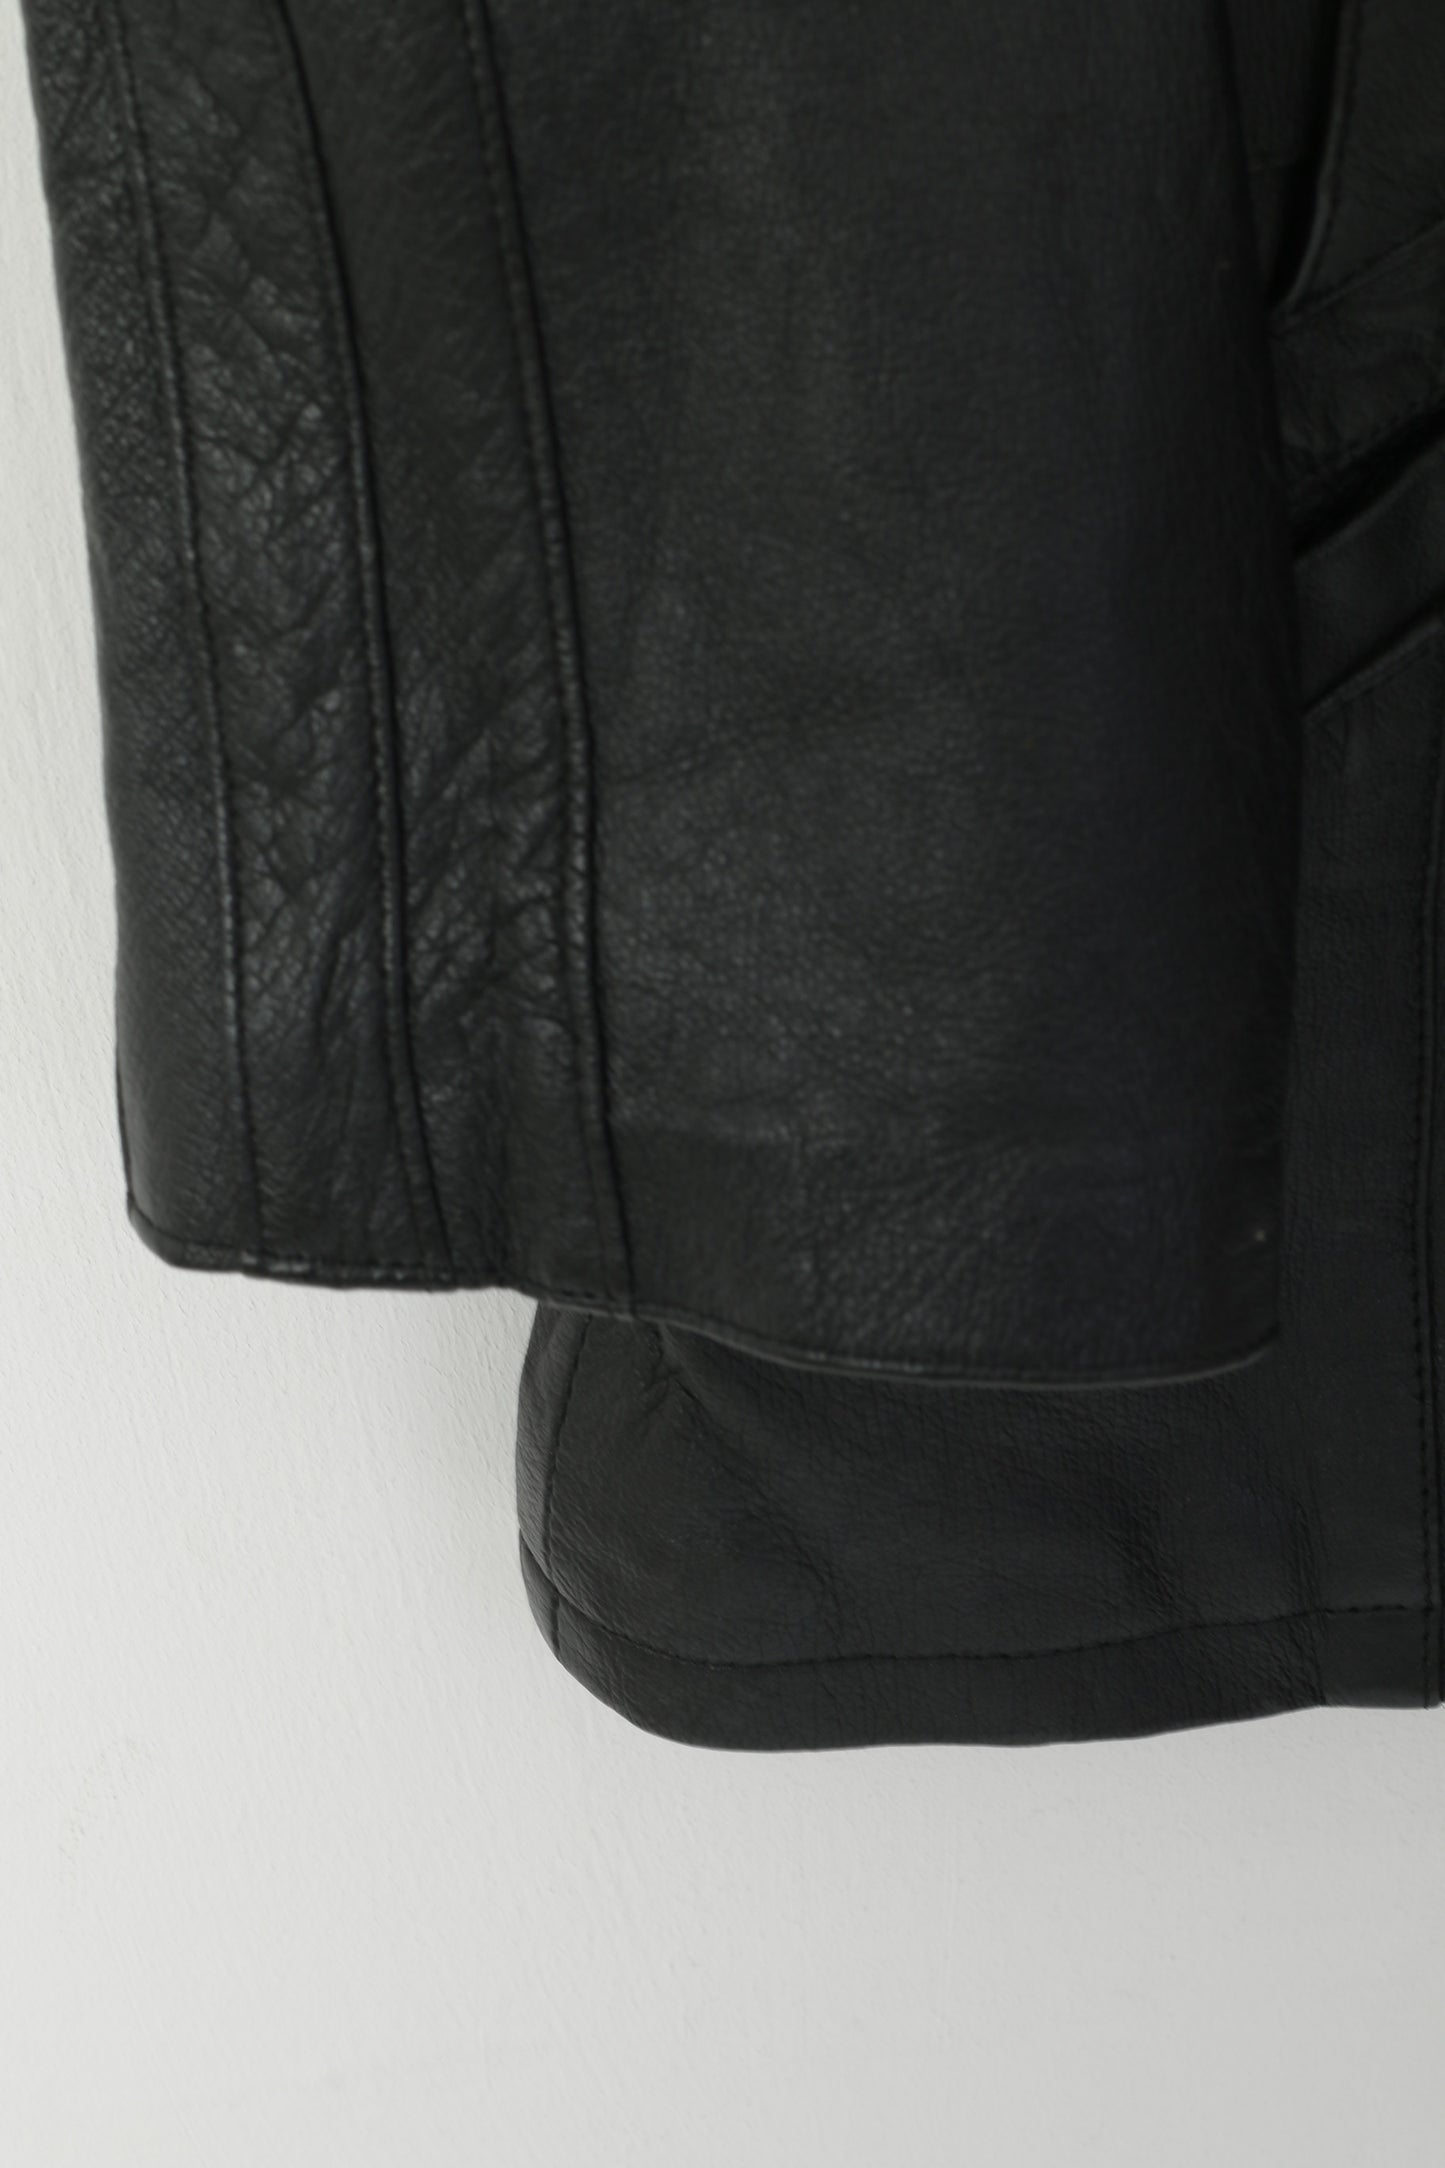 C&A Women 40 L Jacket Black Leather Raglan Sleeve Ramones Biker Belted Top